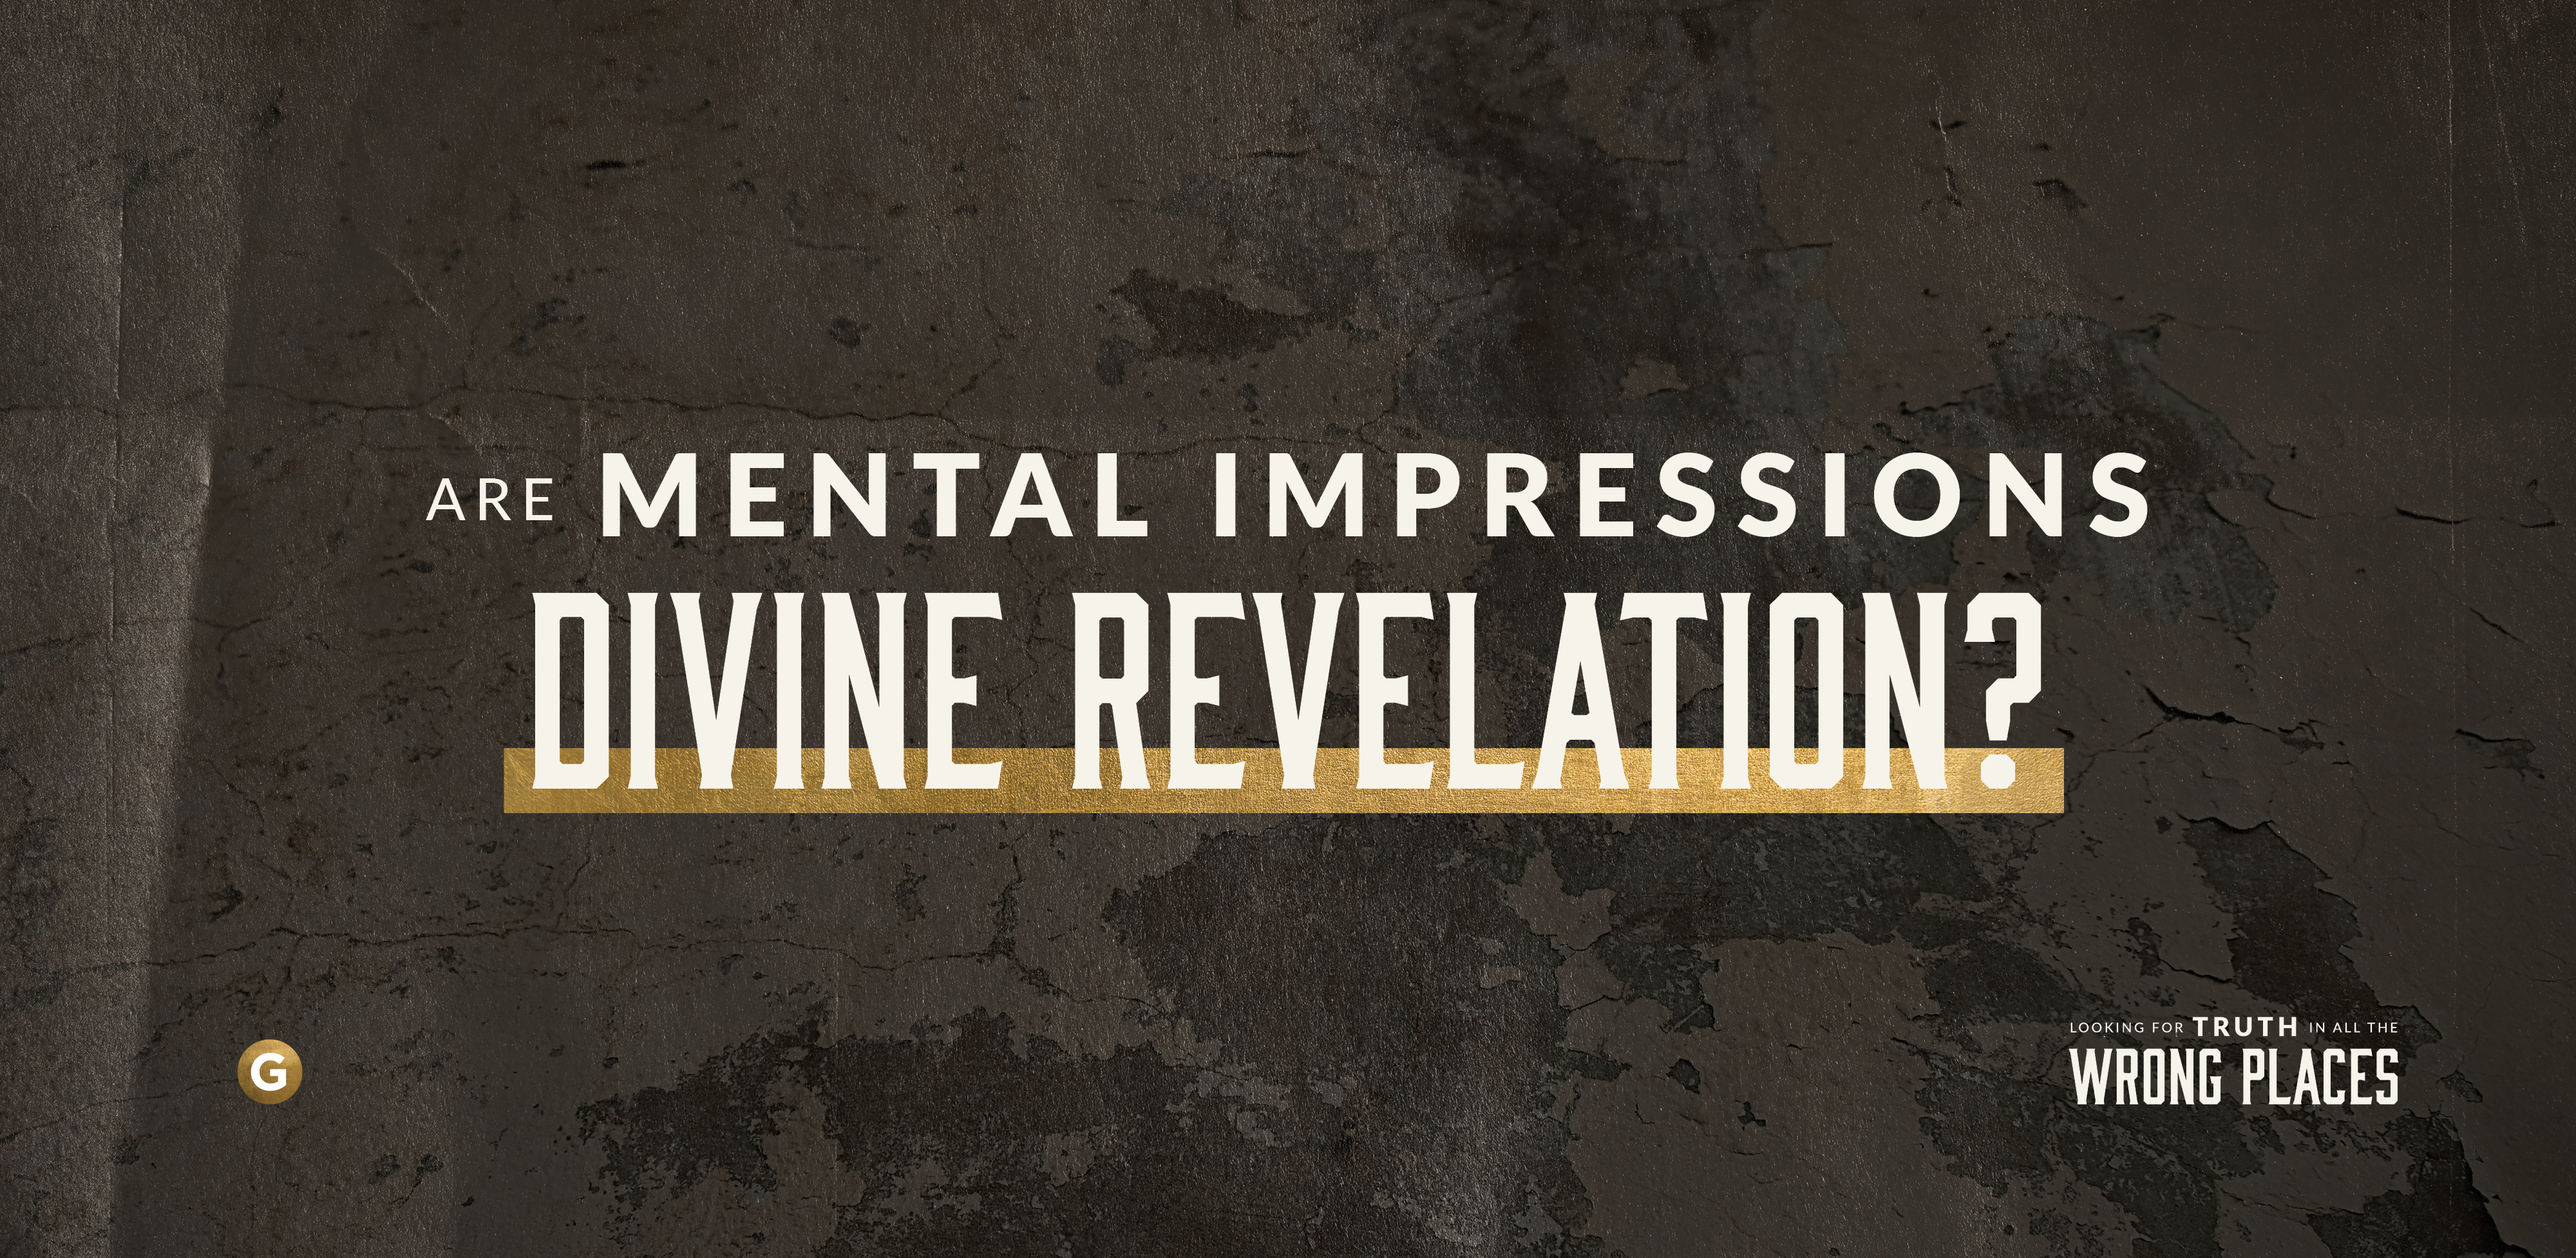 Are Mental Impressions Divine Revelation?